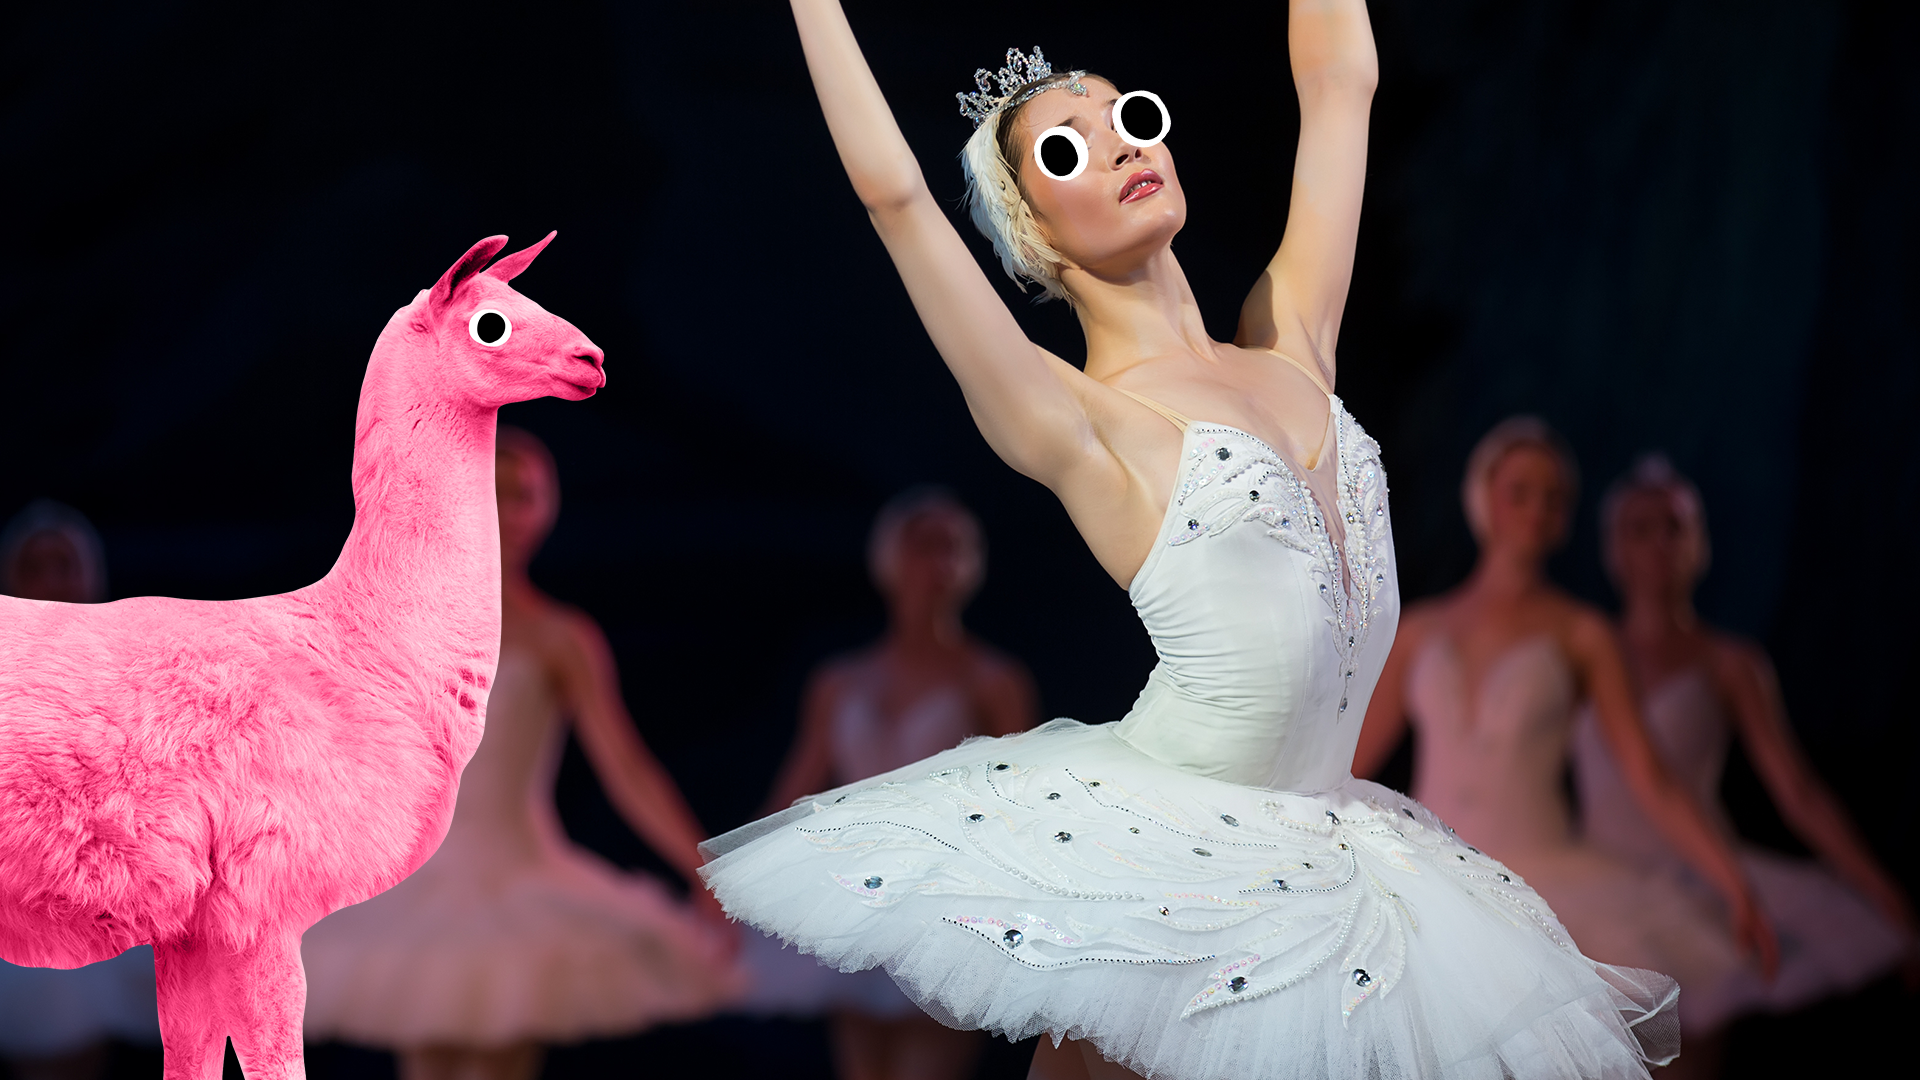 A ballerina and a pink llama